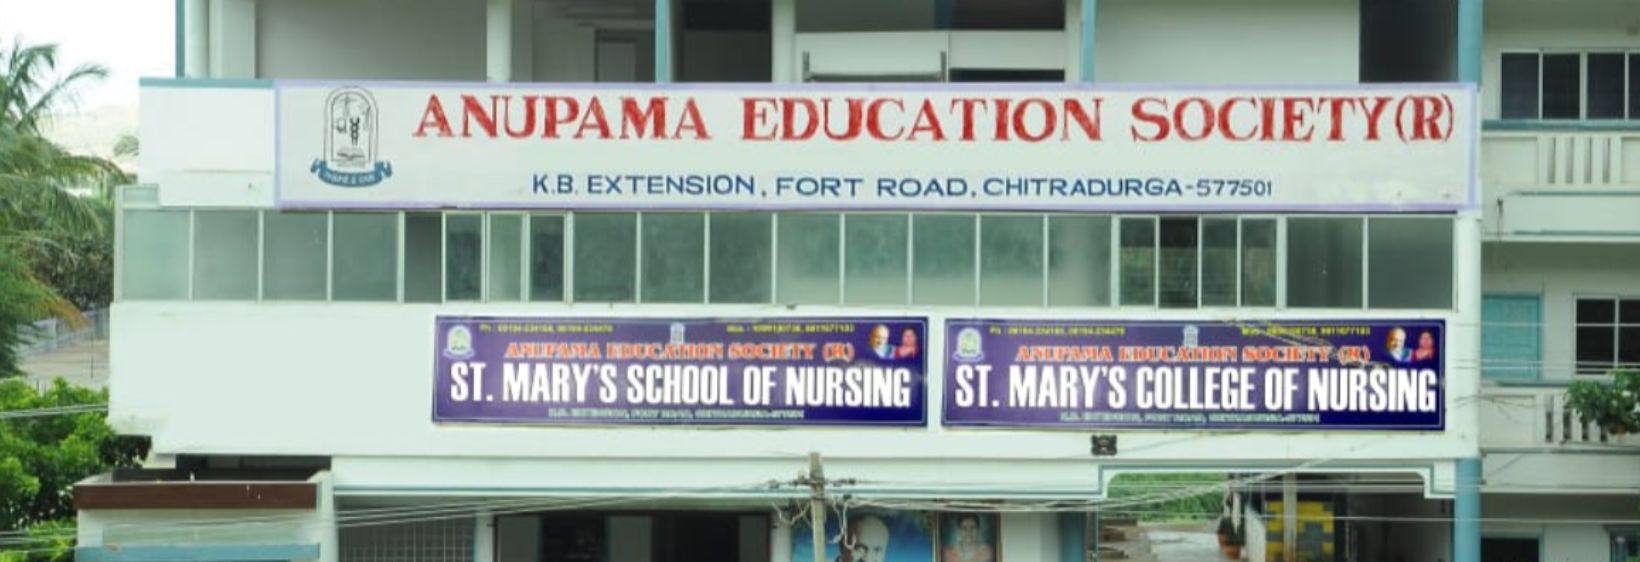 St Mary's College of Nursing - Chitradurga